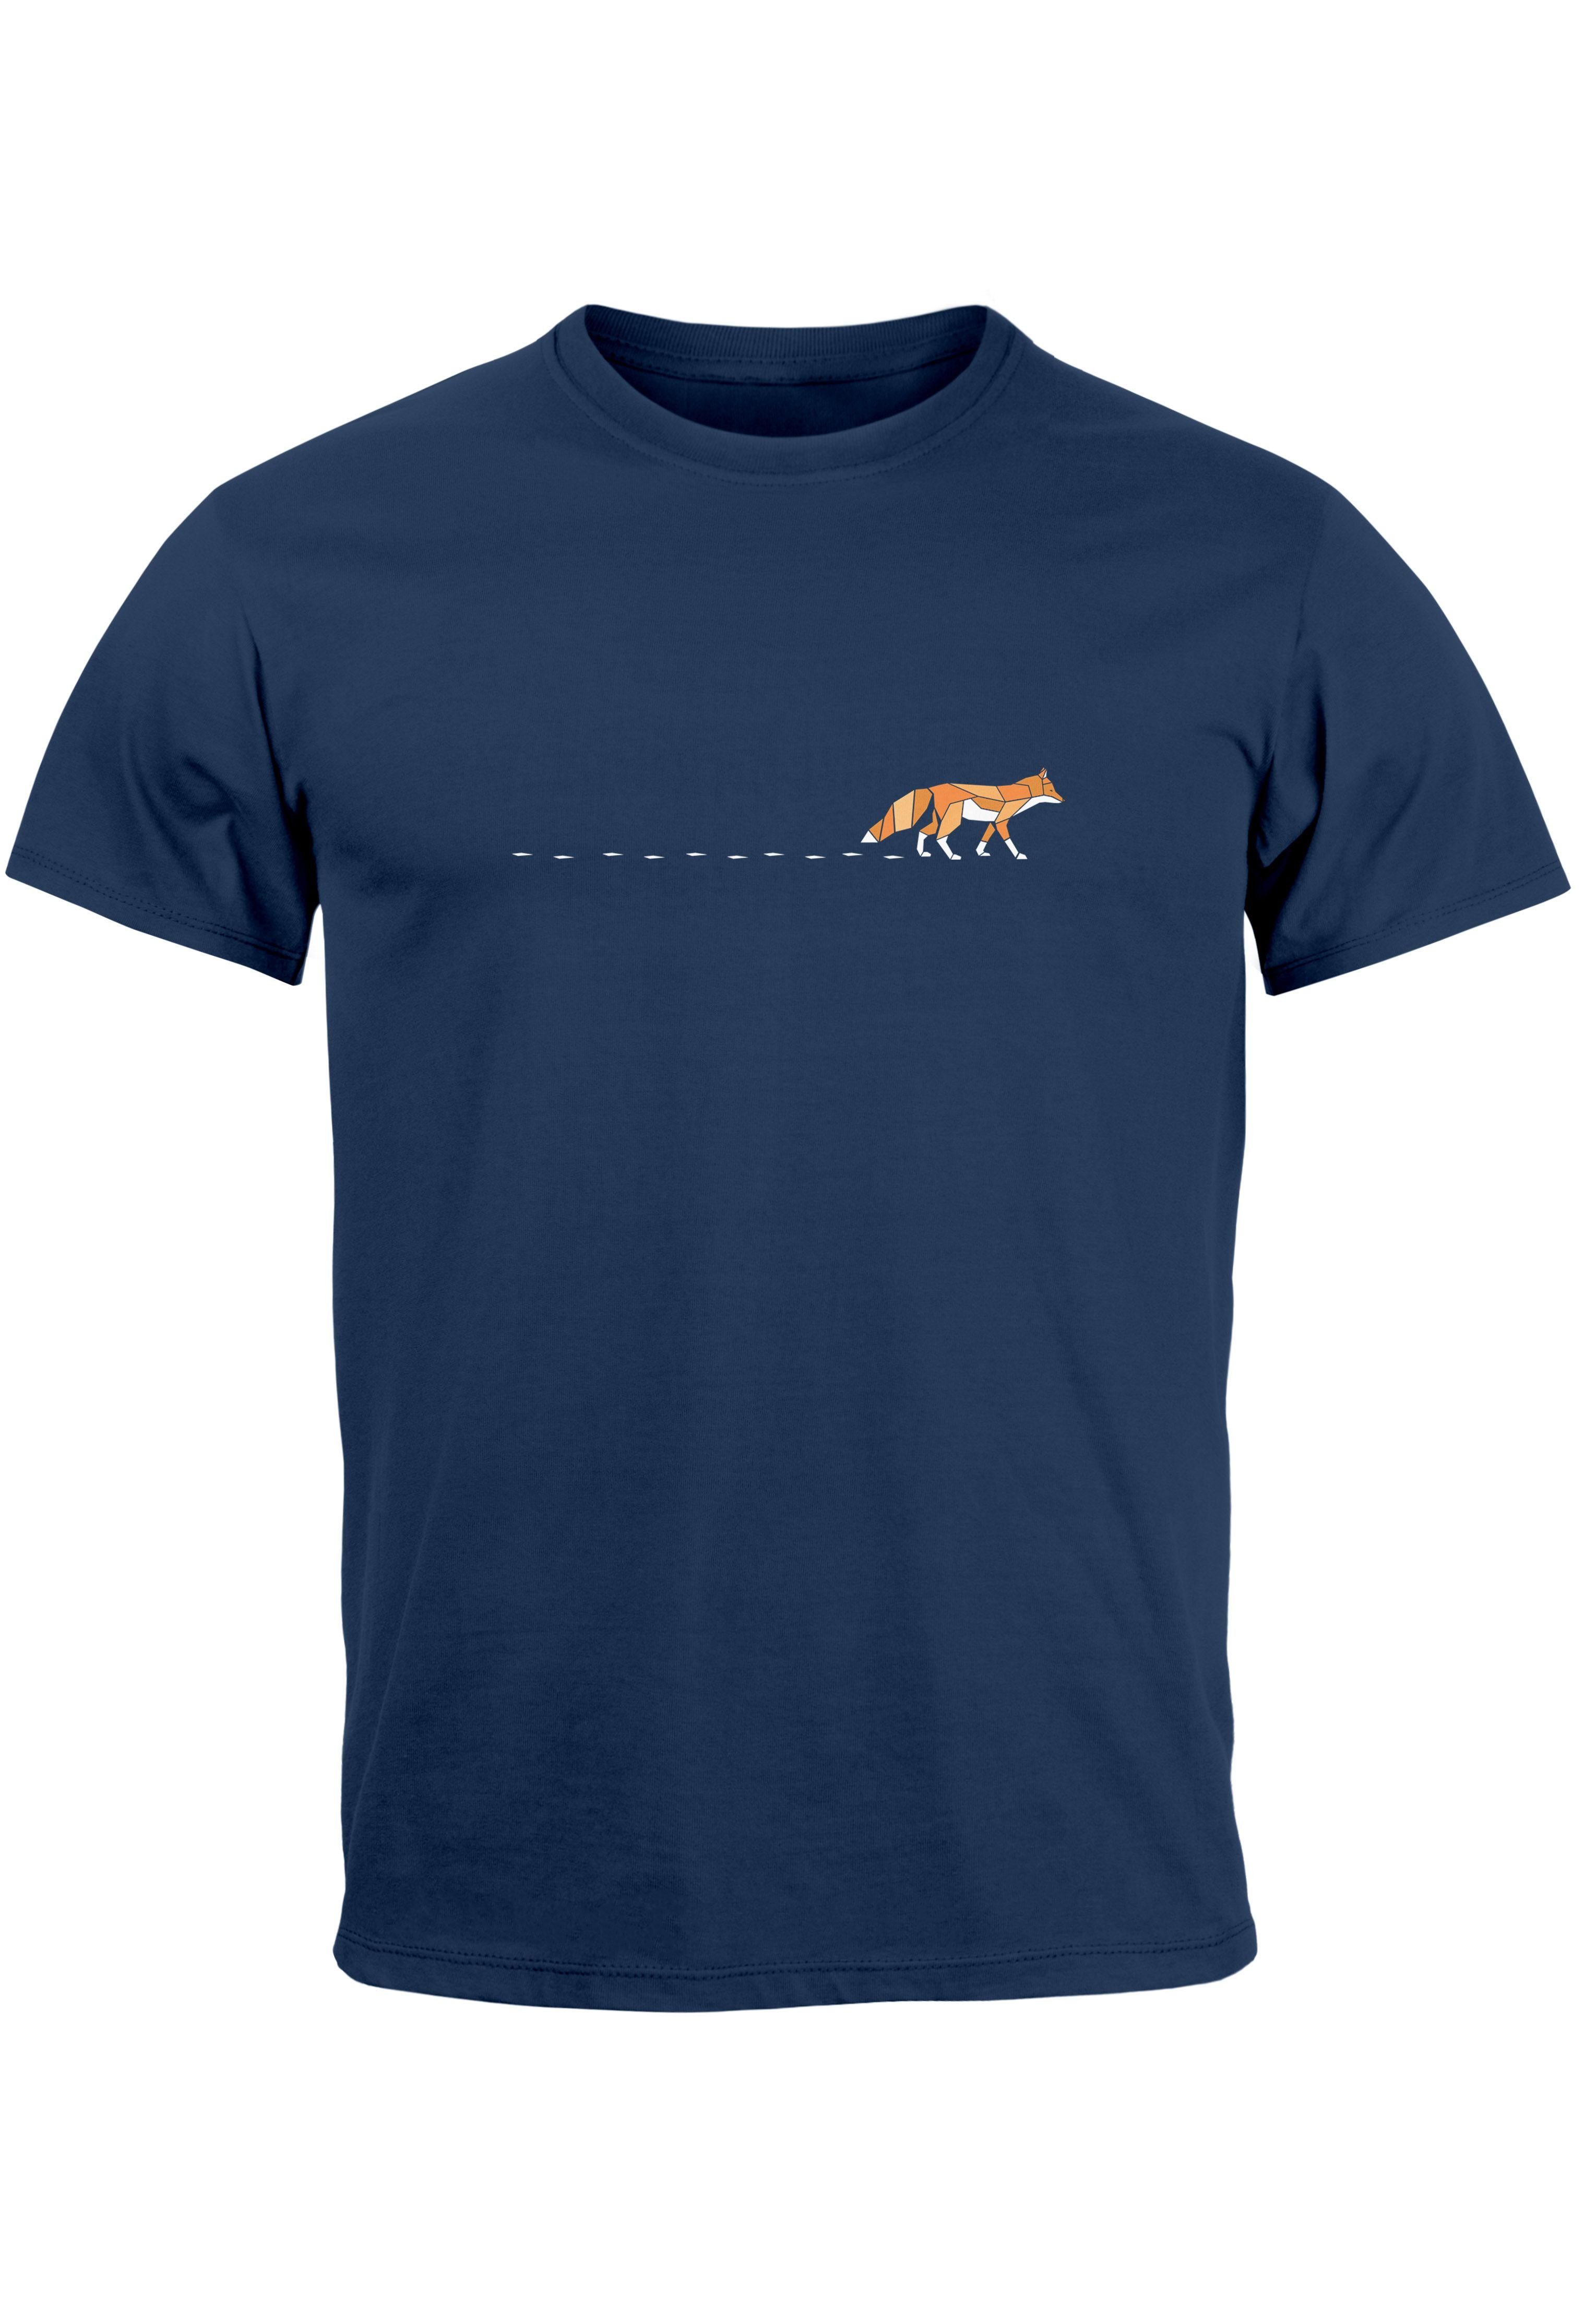 Herren Logo Fashion Stree Print mit navy Print-Shirt Neverless Wald Print Badge Tiermotiv Fuchs Fox T-Shirt